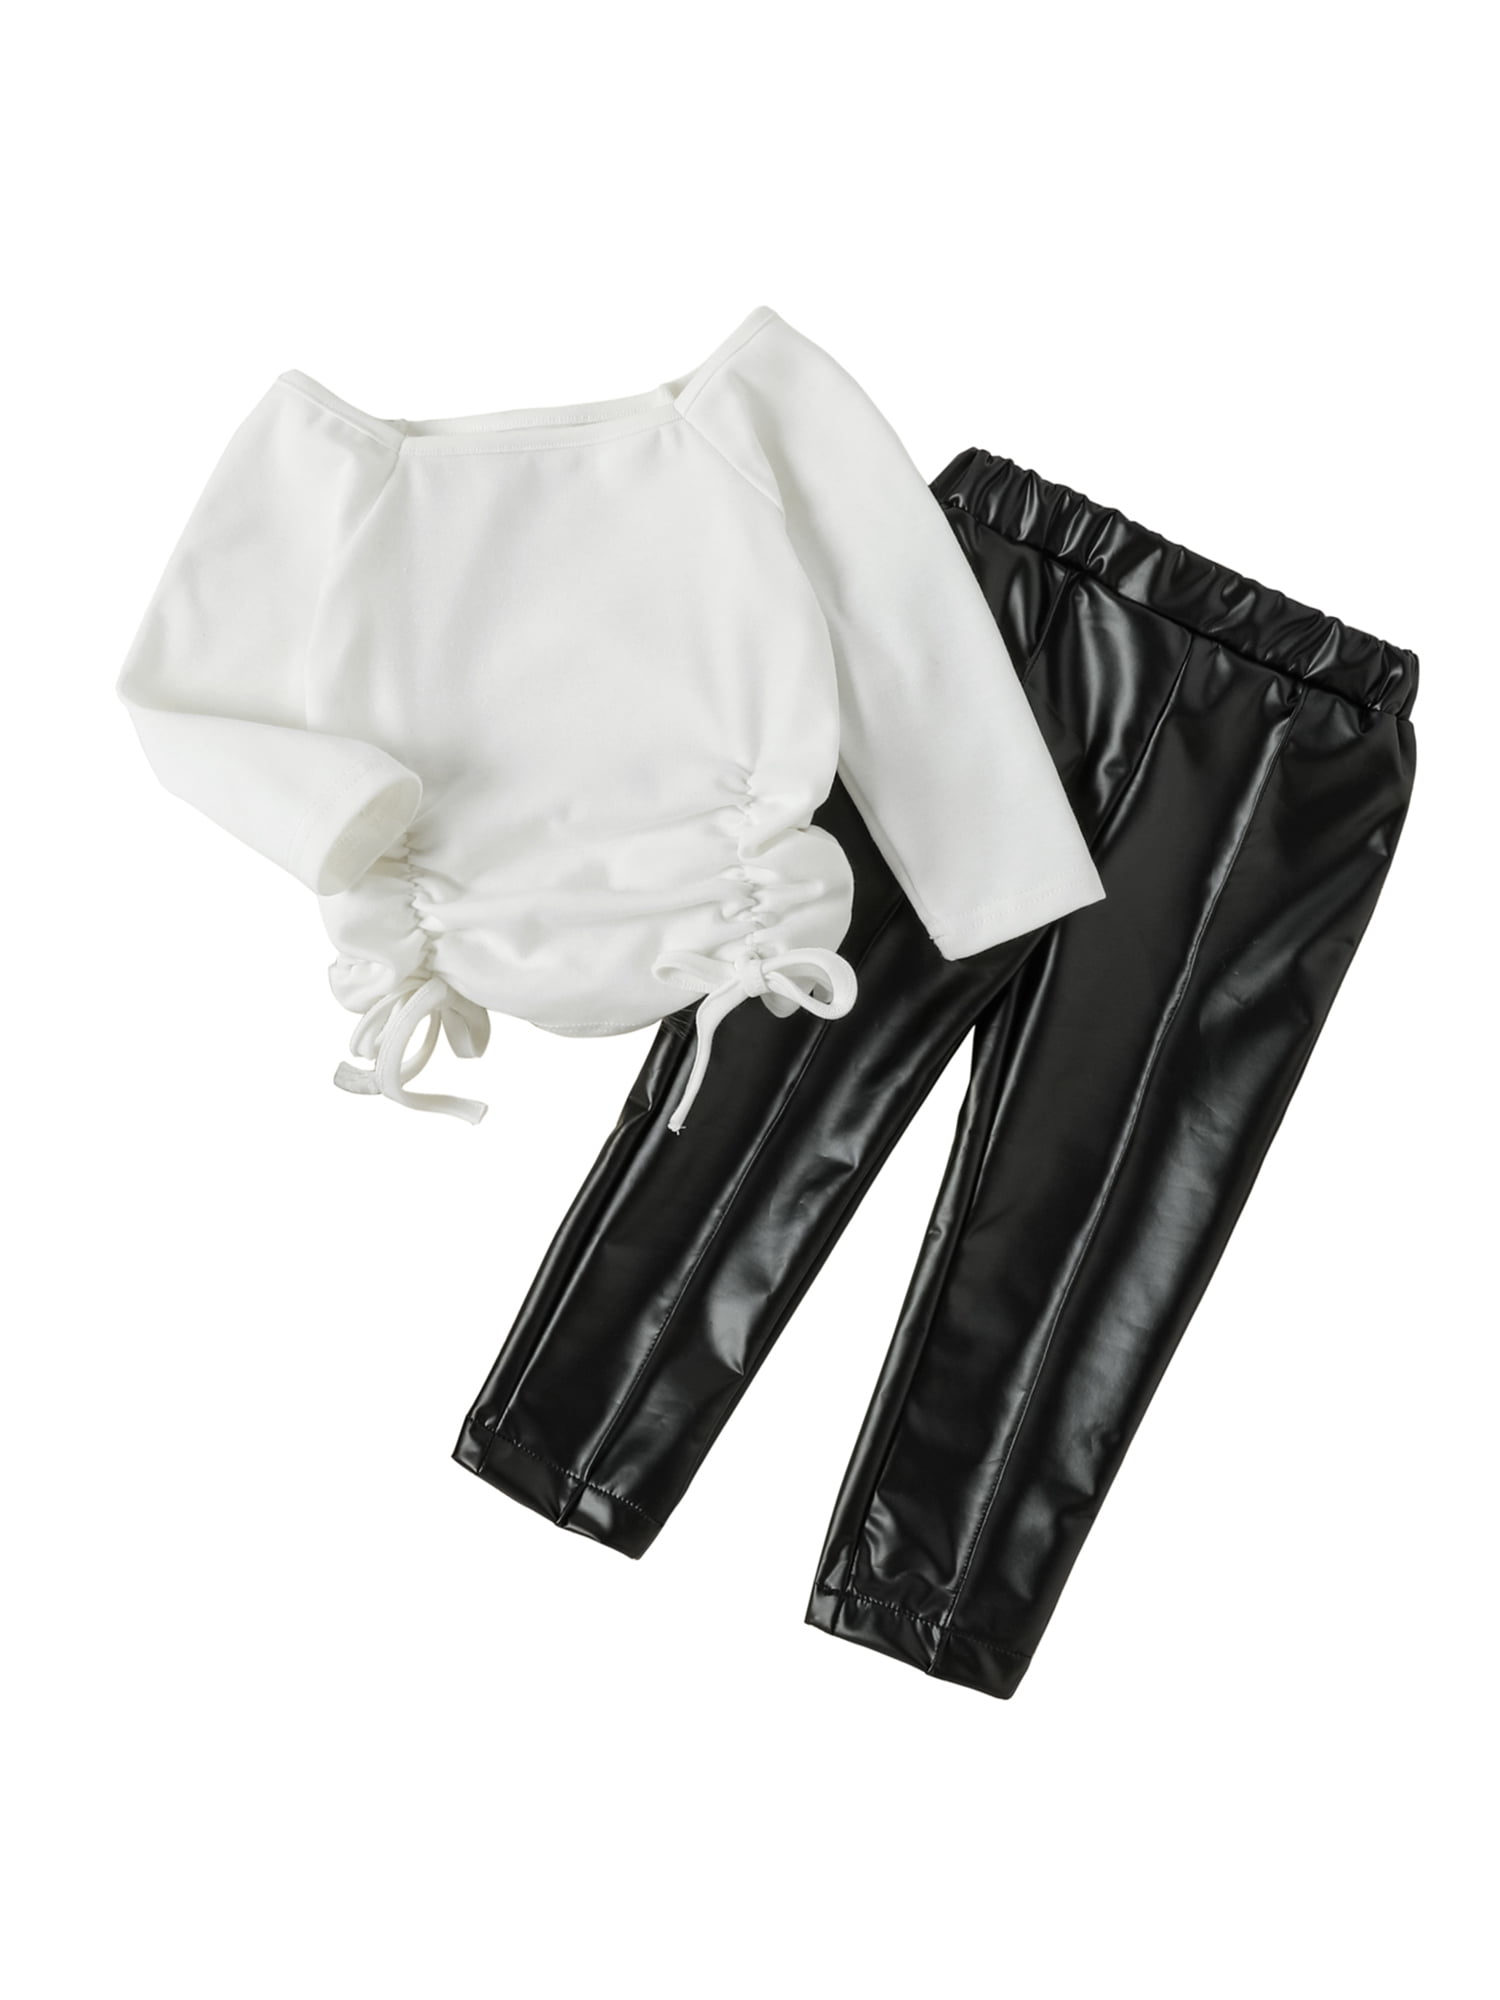 Paris Fashion Week-Leather Pants-White shirt-Travel - 1 of 8 (7) - Lisa  DiCicco Cahue